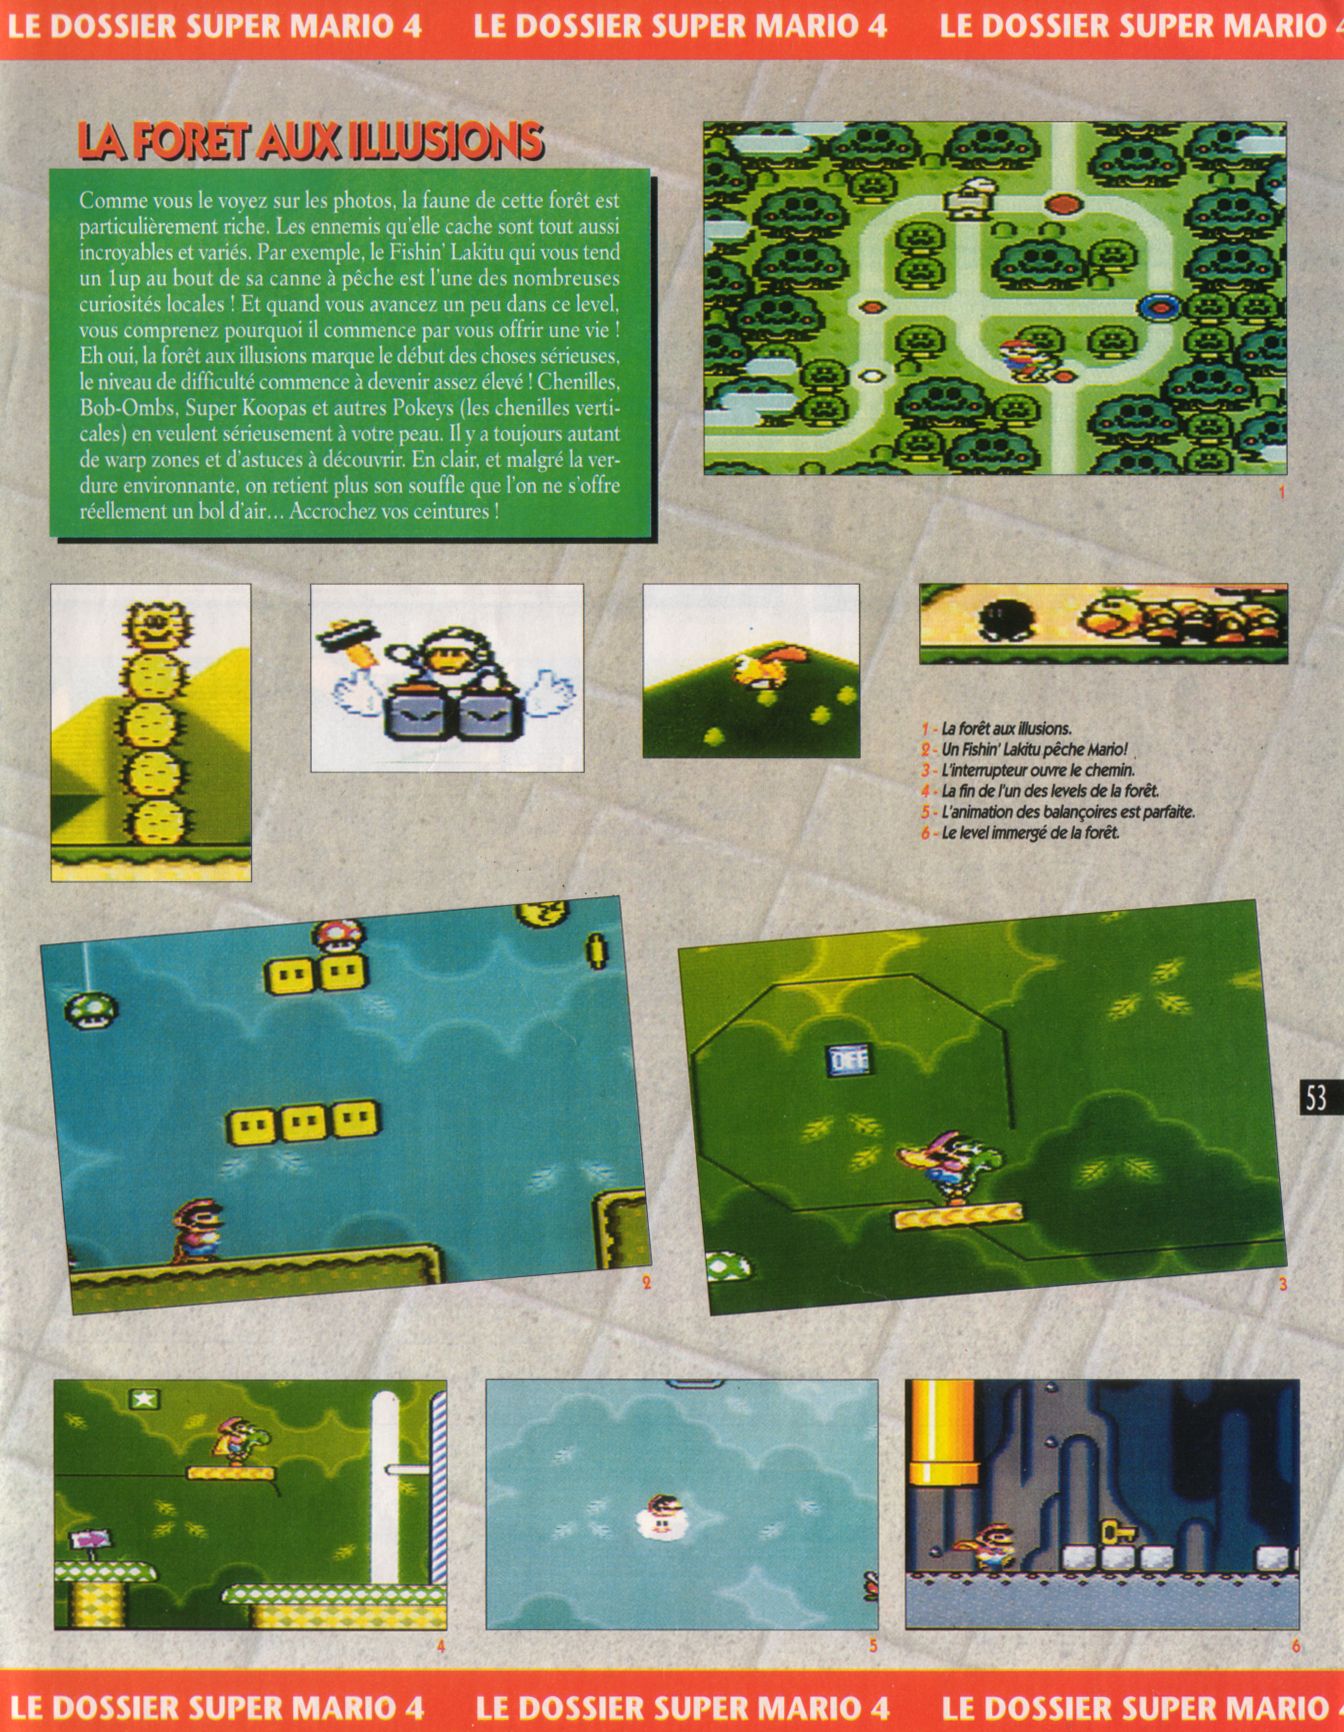 [TEST] Super Mario World (Super Famicom) Player%20One%20019%20-%20Page%20053%20%281992-04%29